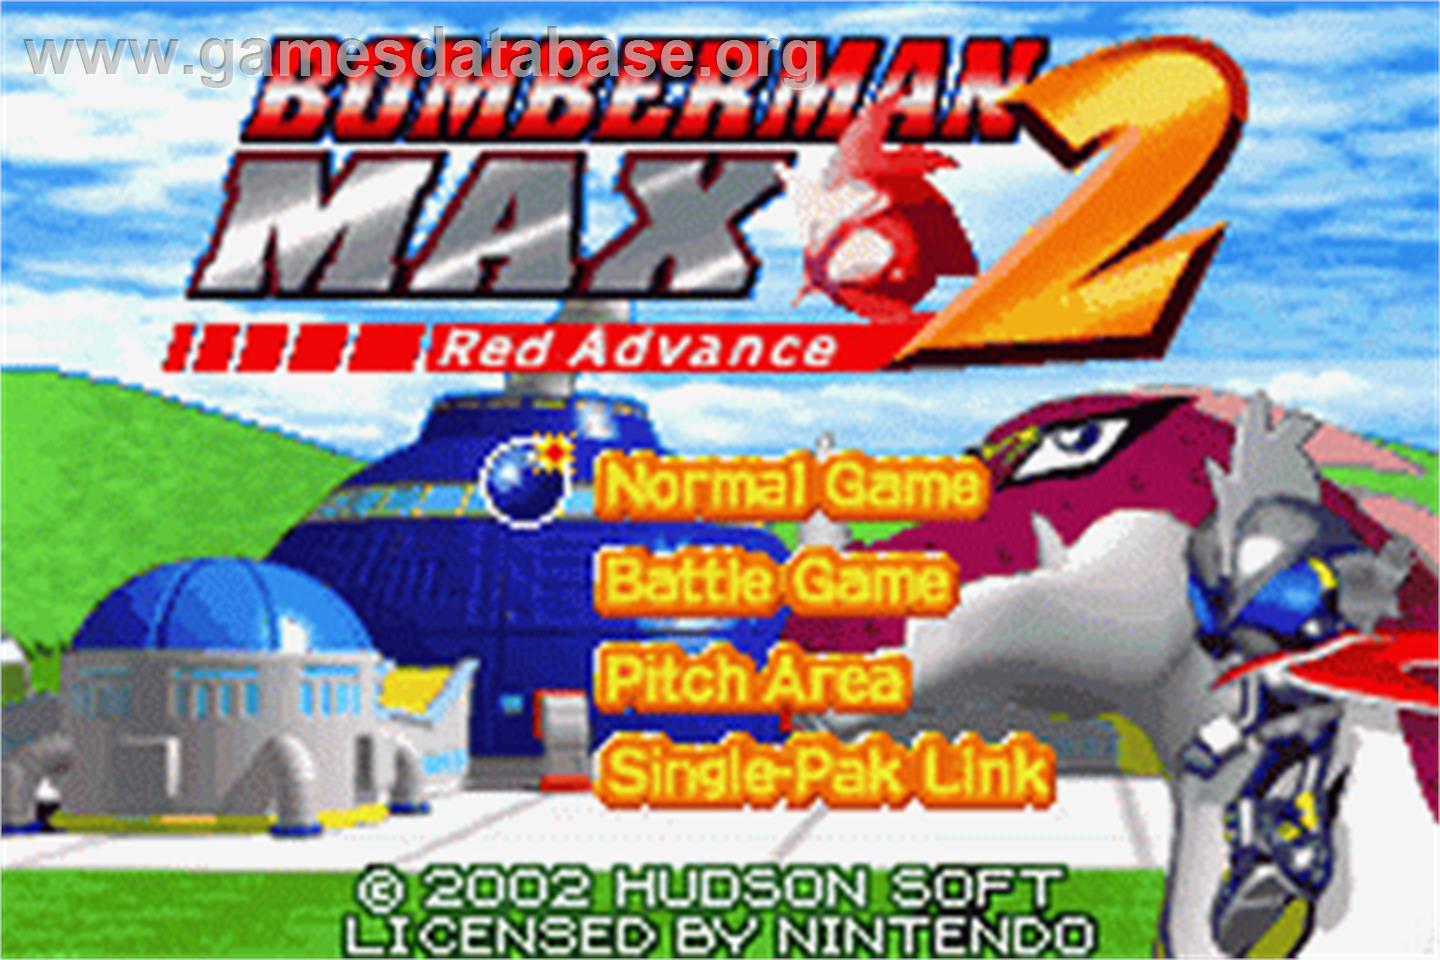 Bomberman Max 2: Red Advance - Nintendo Game Boy Advance - Artwork - Title Screen